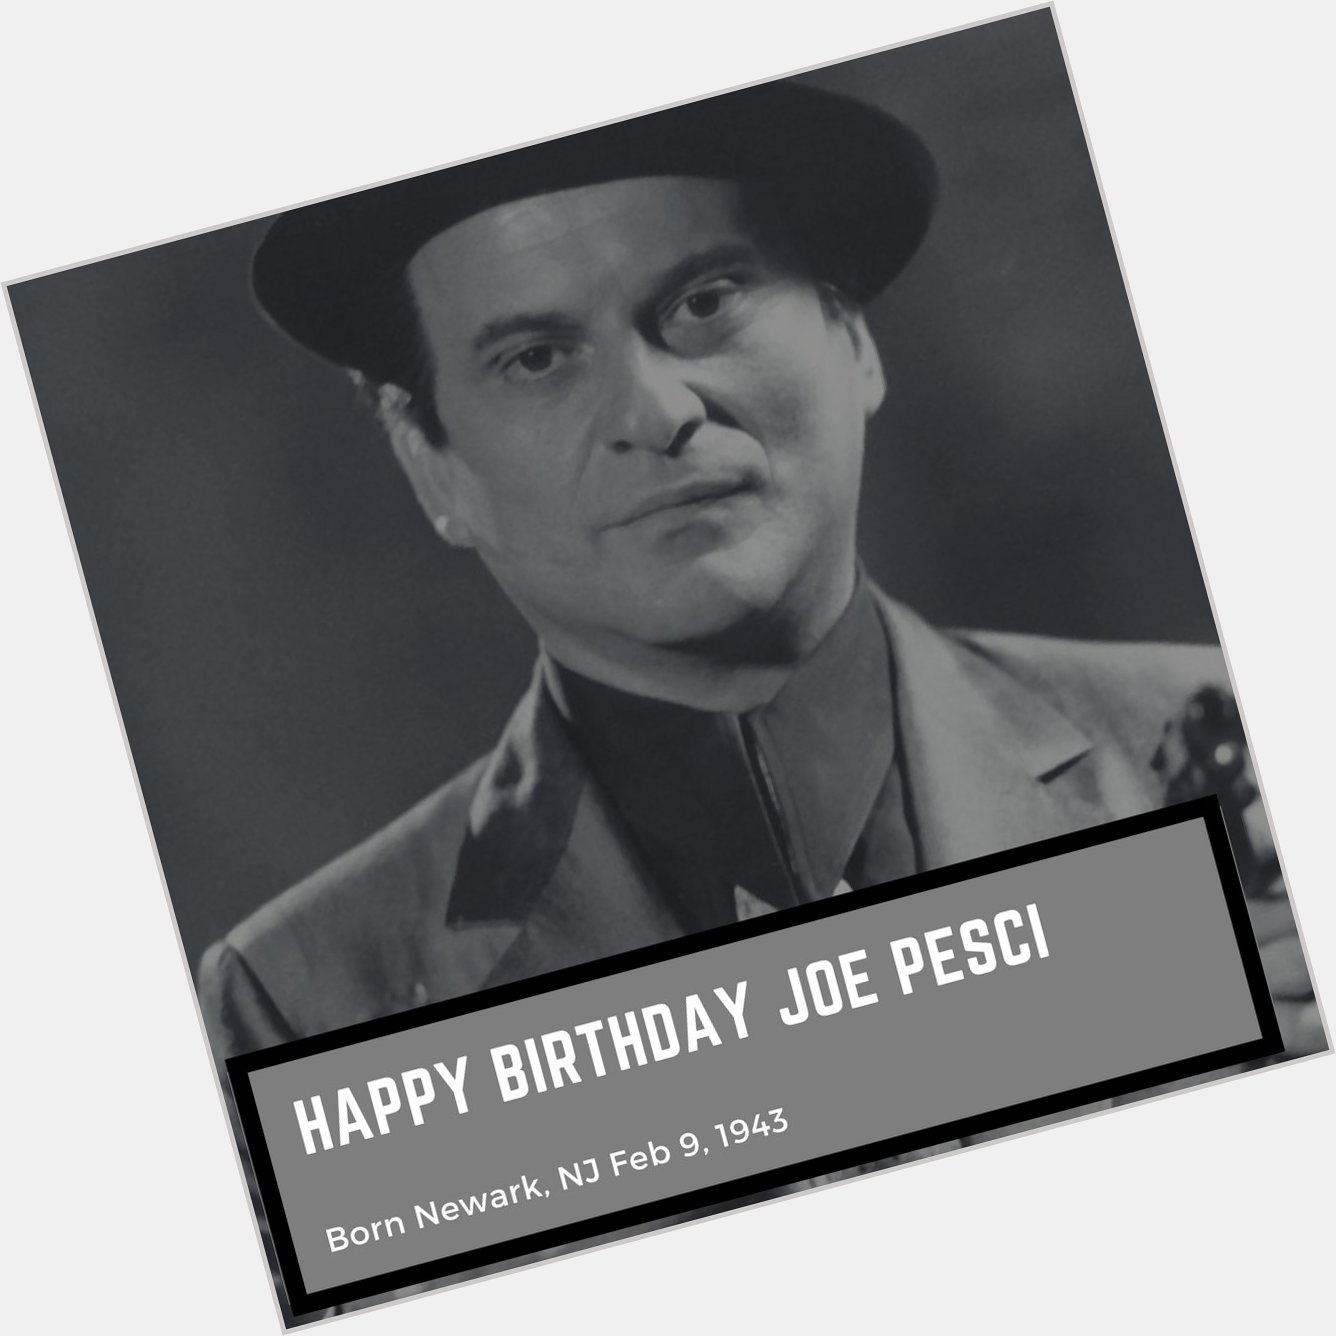 Happy birthday Joe Pesci (Goodfellas, Home Alone, etc.) born 